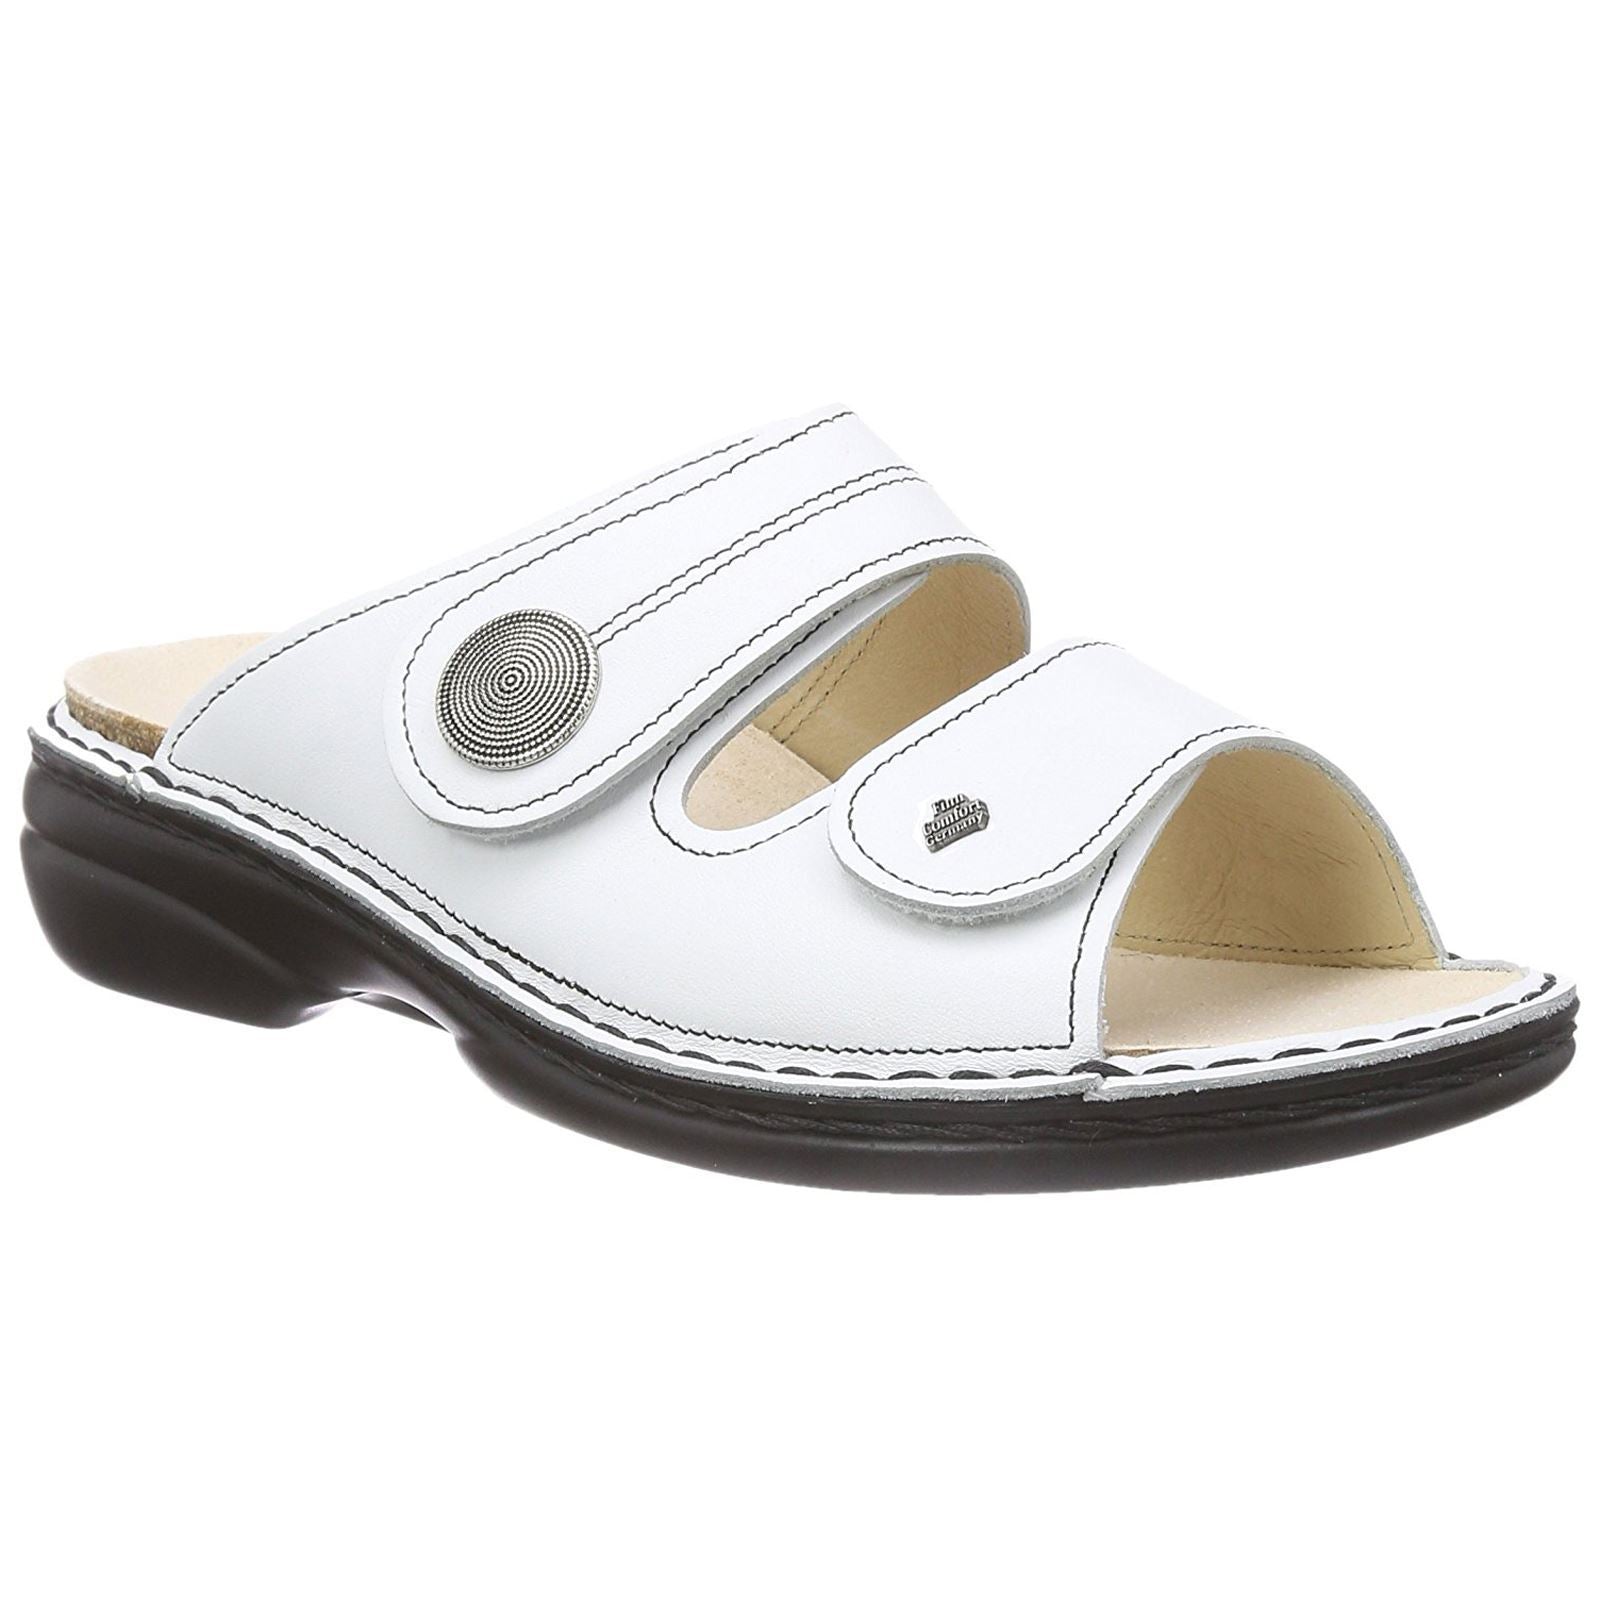 Finn Comfort Sansibar Nappa Leather Women's Slip-On Sandals#color_nappa white